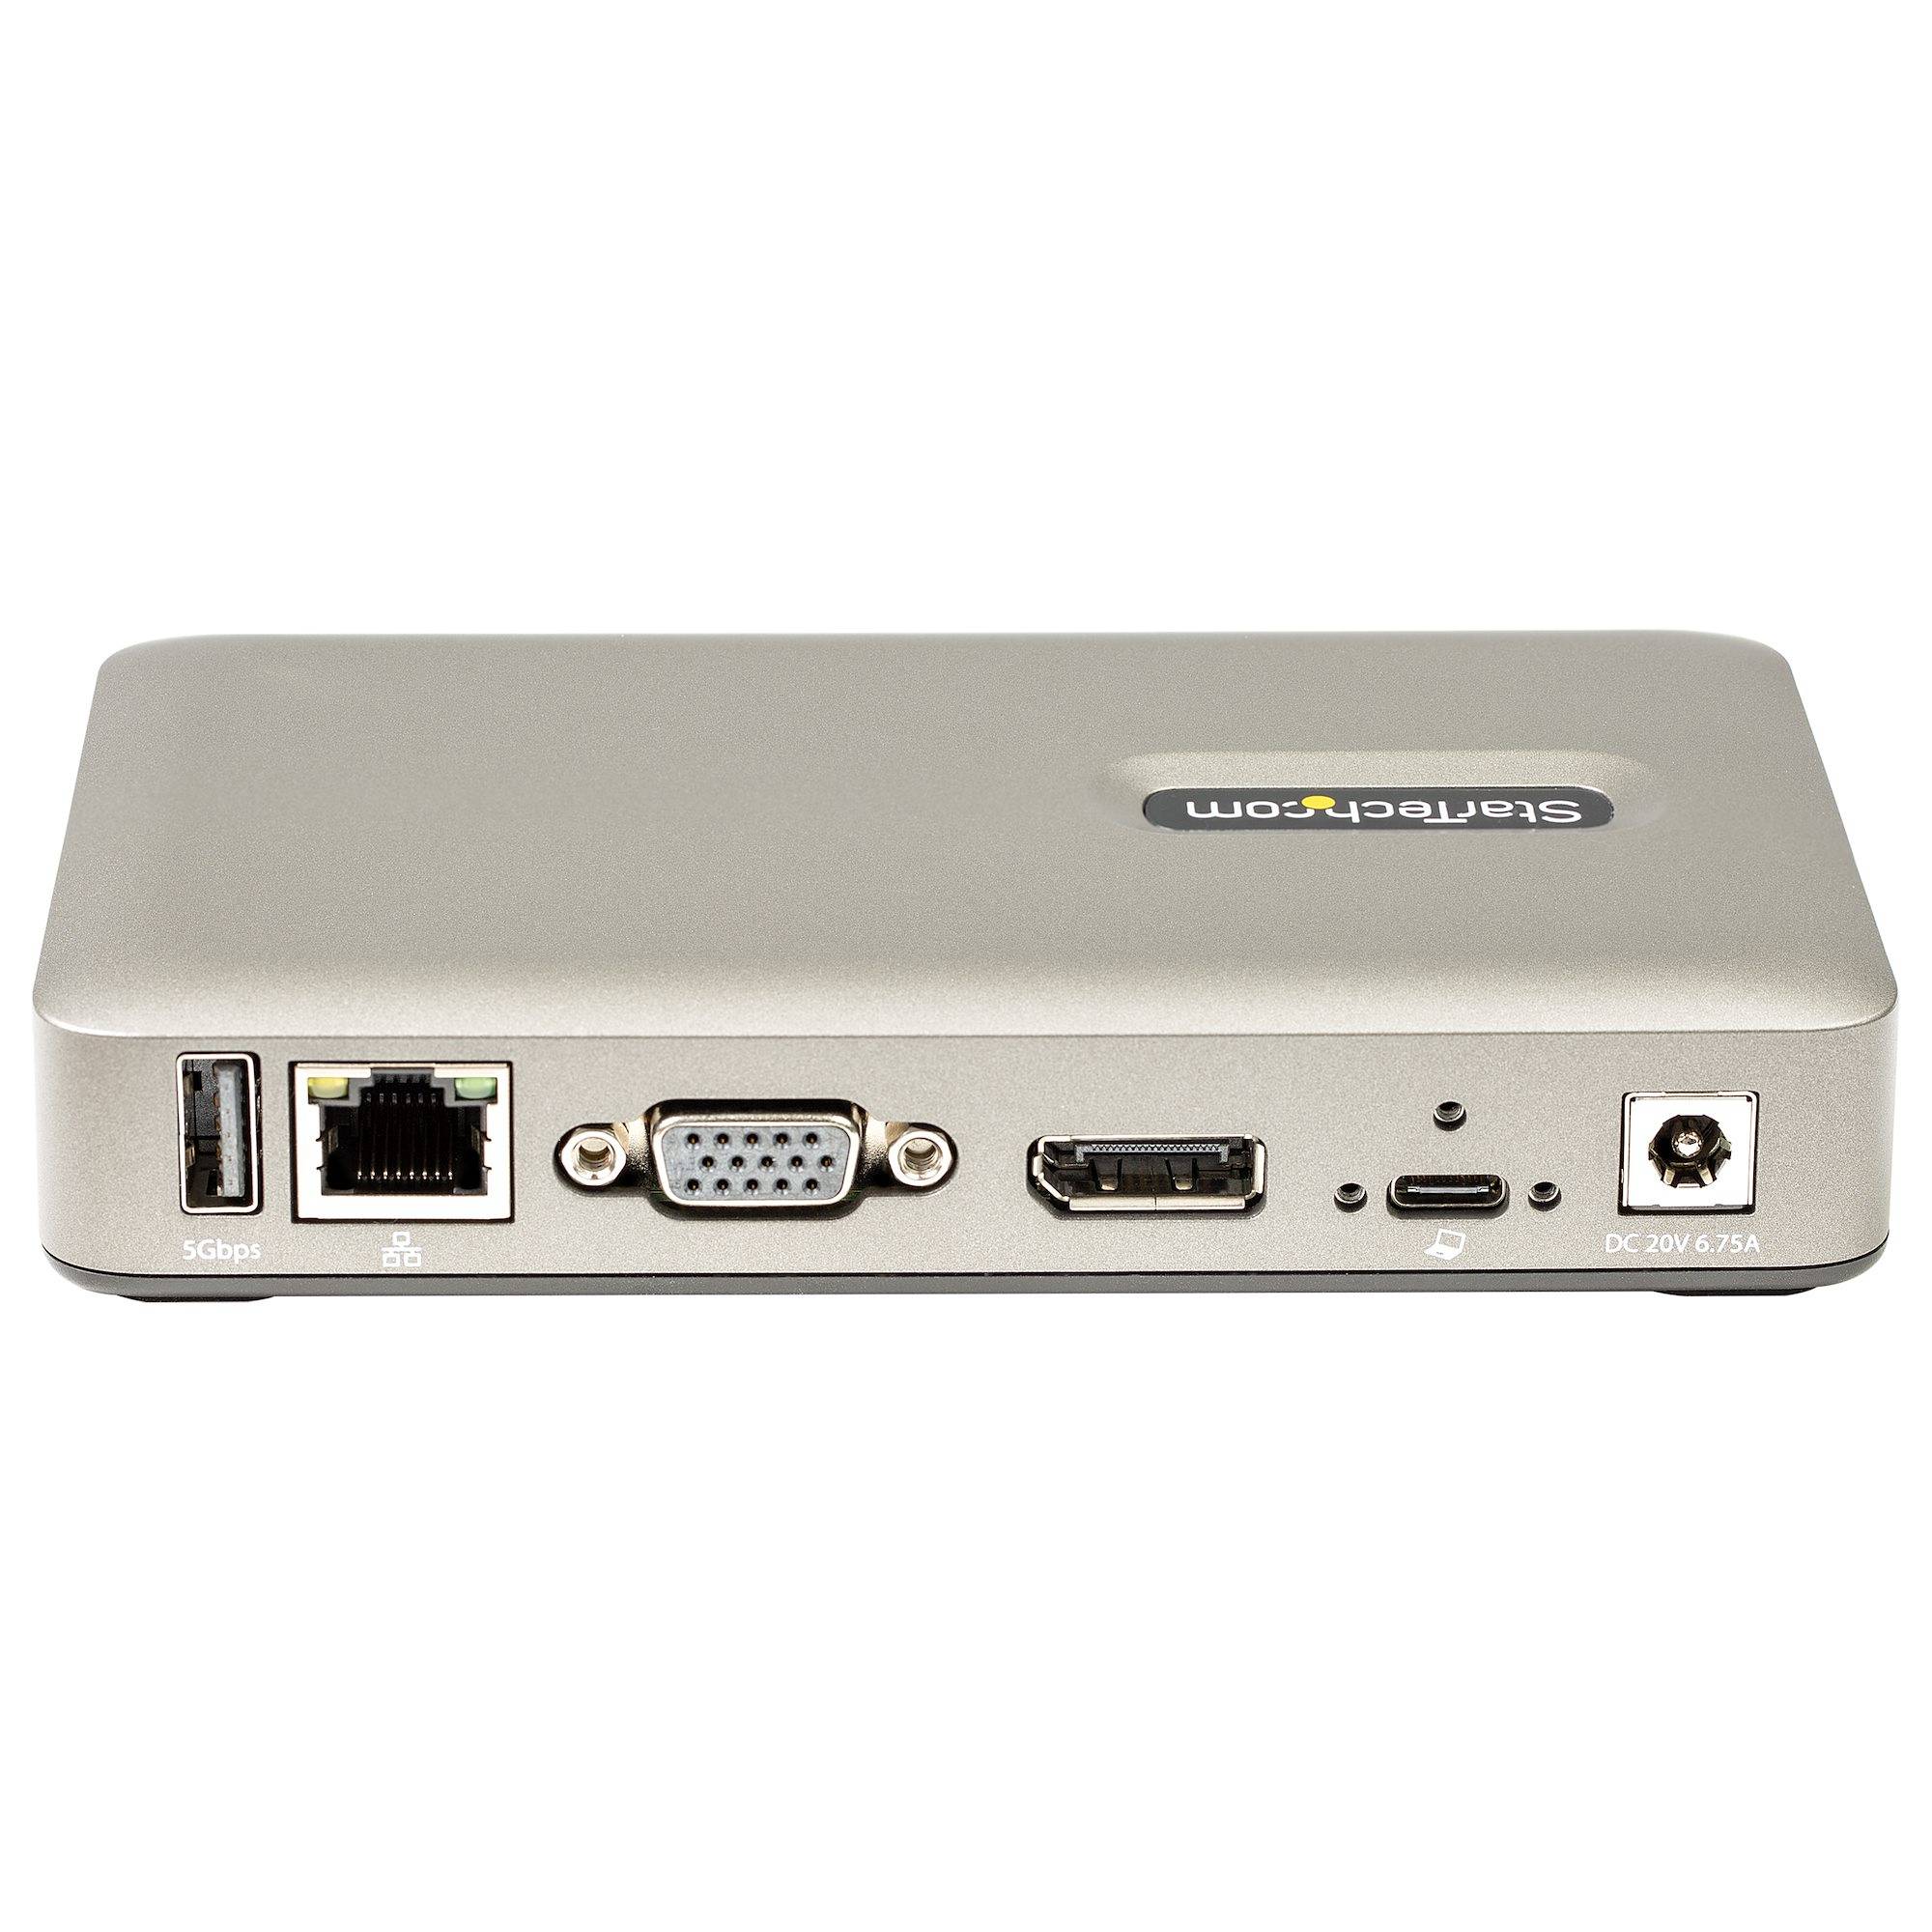 Rca Informatique - image du produit : USB C DOCK DISPLAYPORT 4K 30HZ OR VGA/65W PD/4-PORT USB HUB/GBE